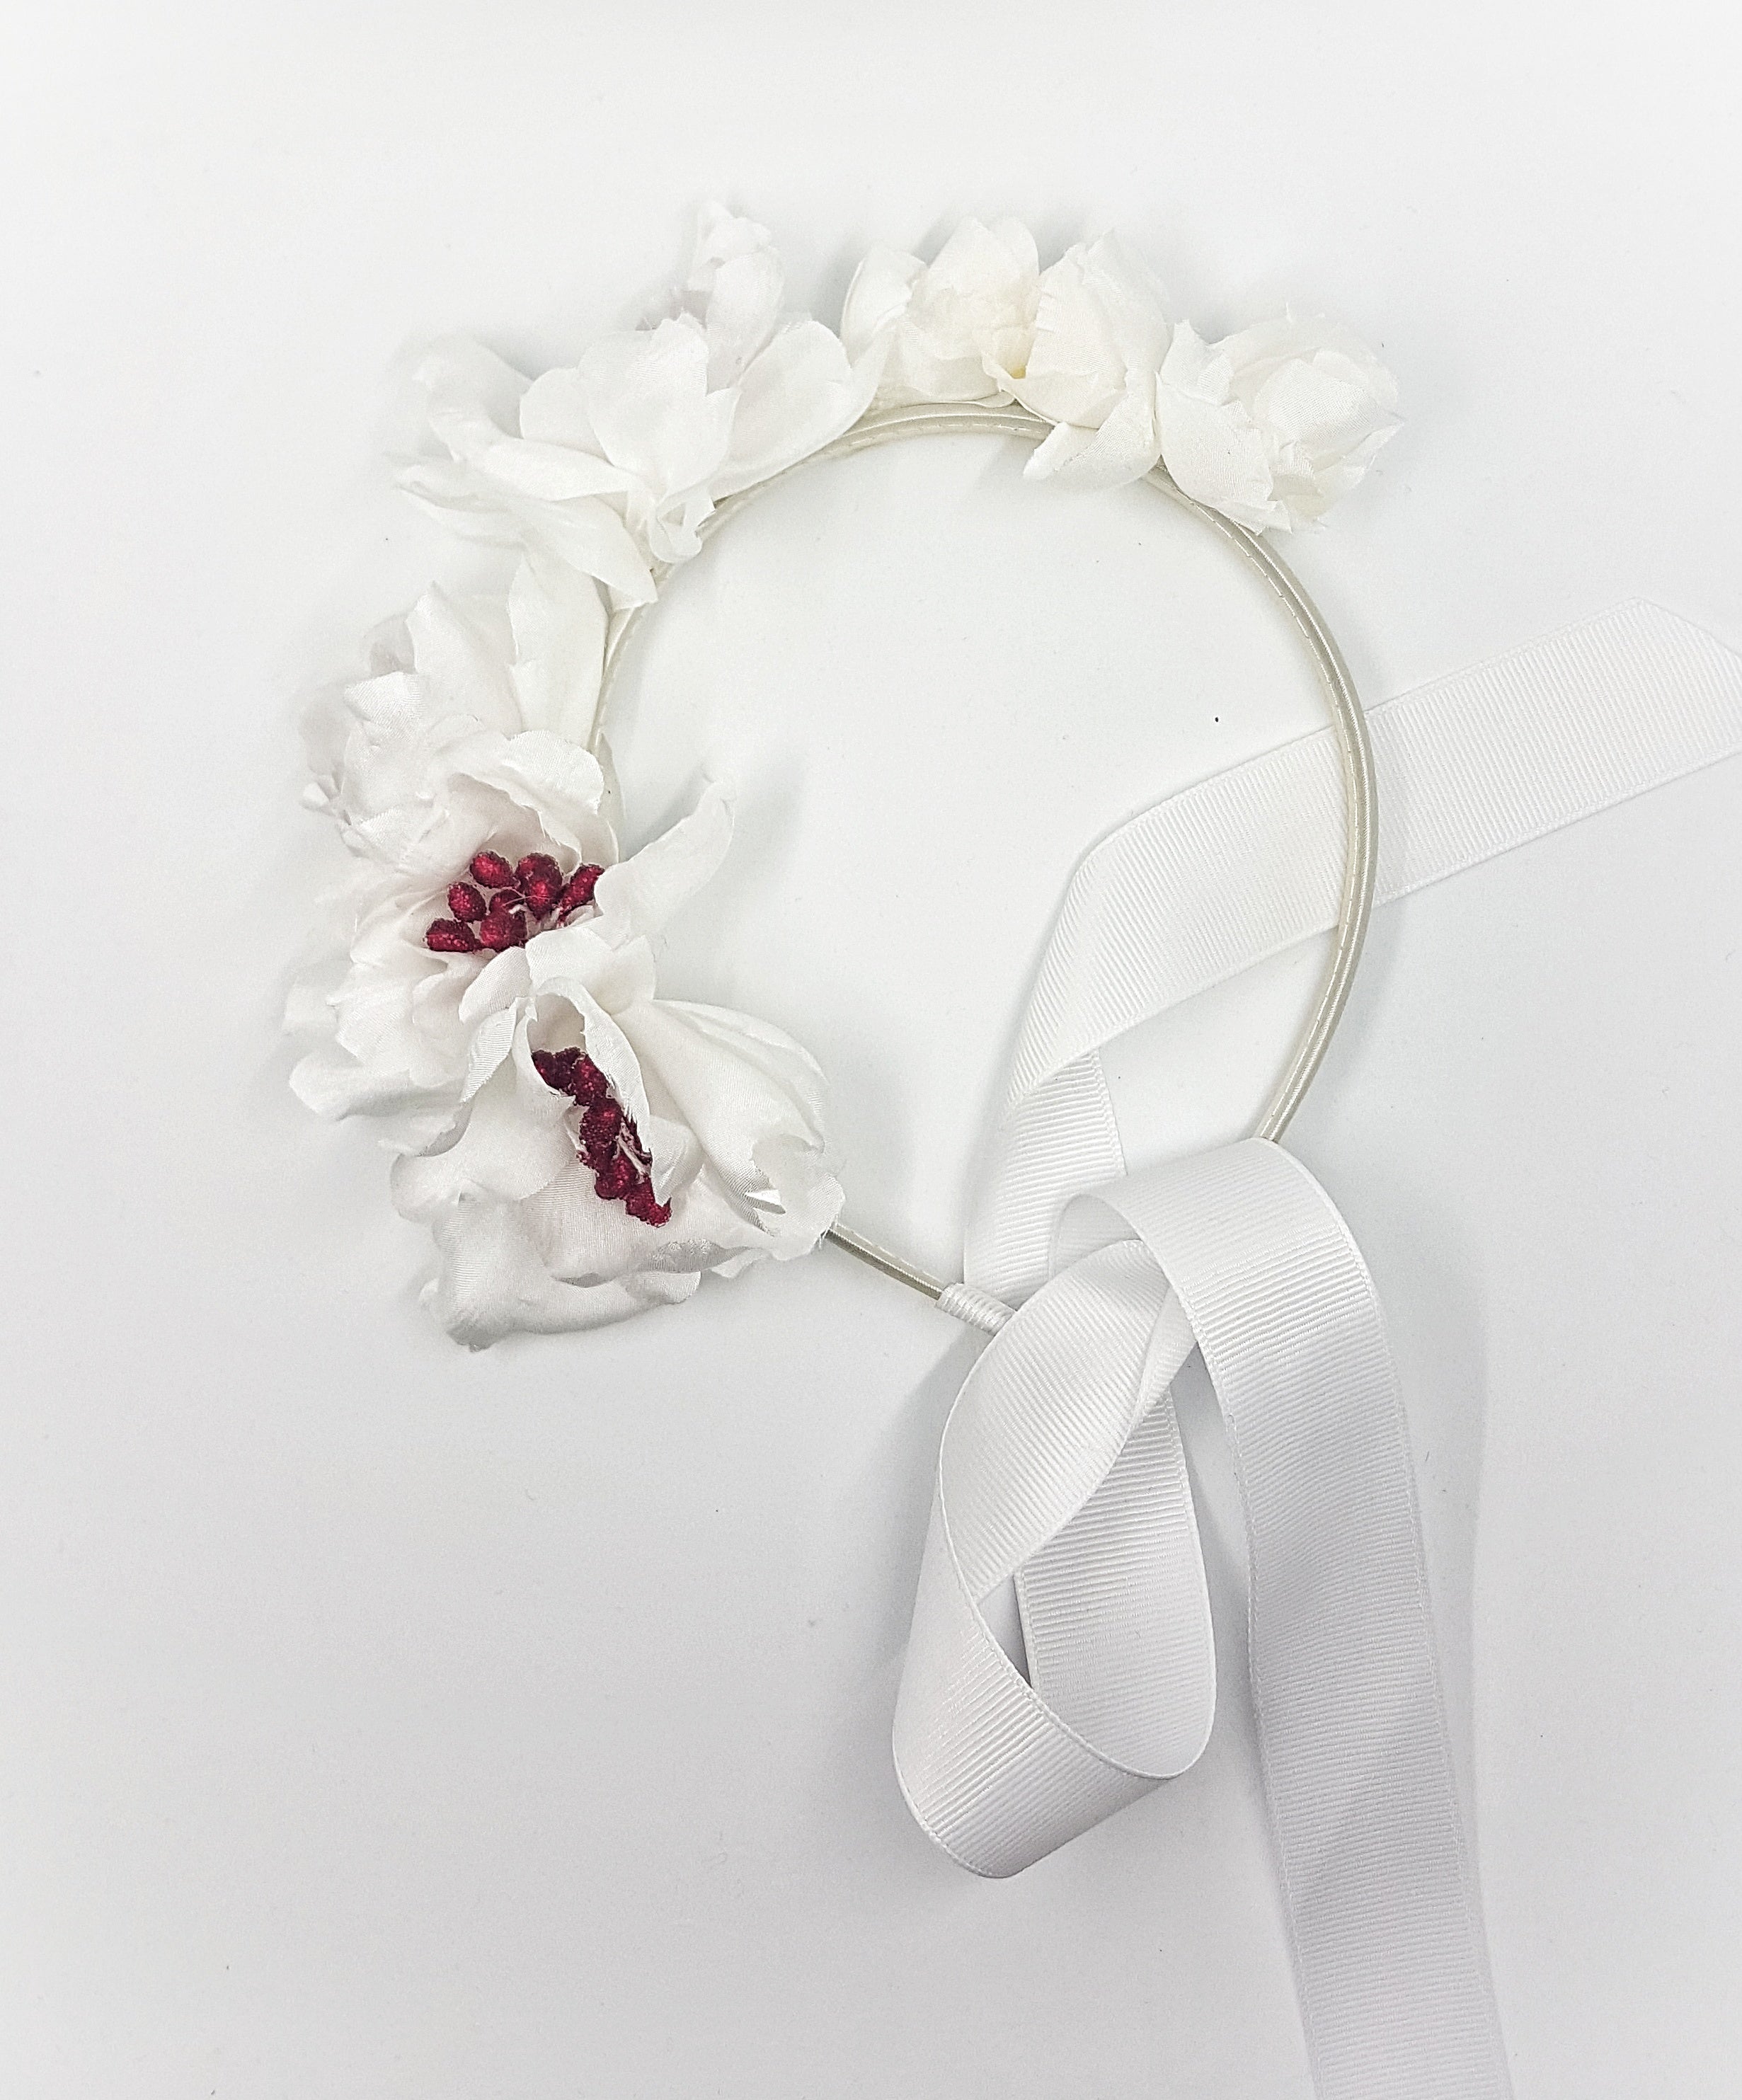 The Orchid headband